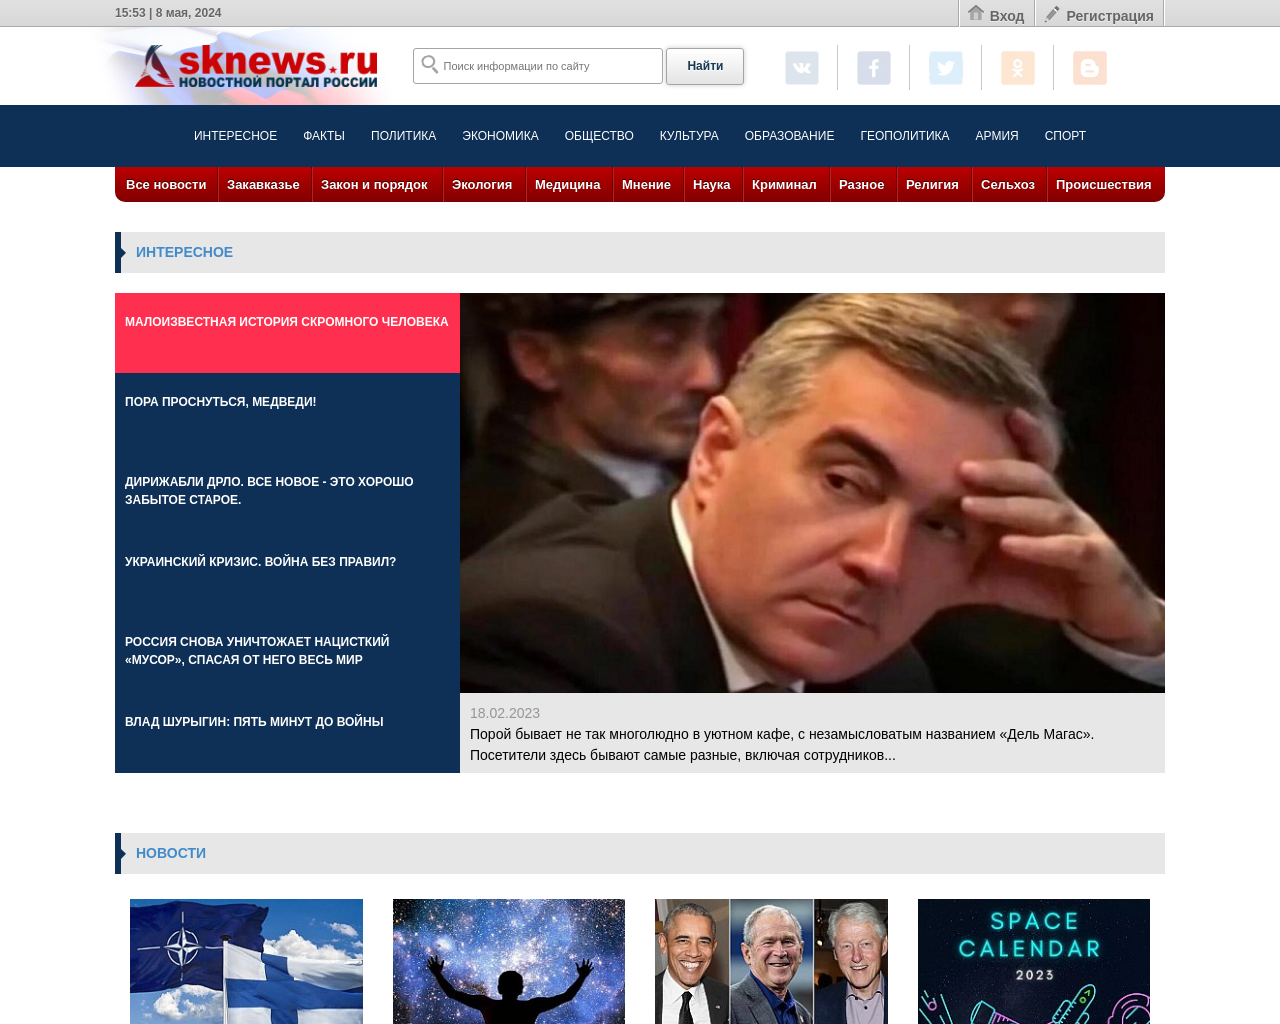 sknews.ru